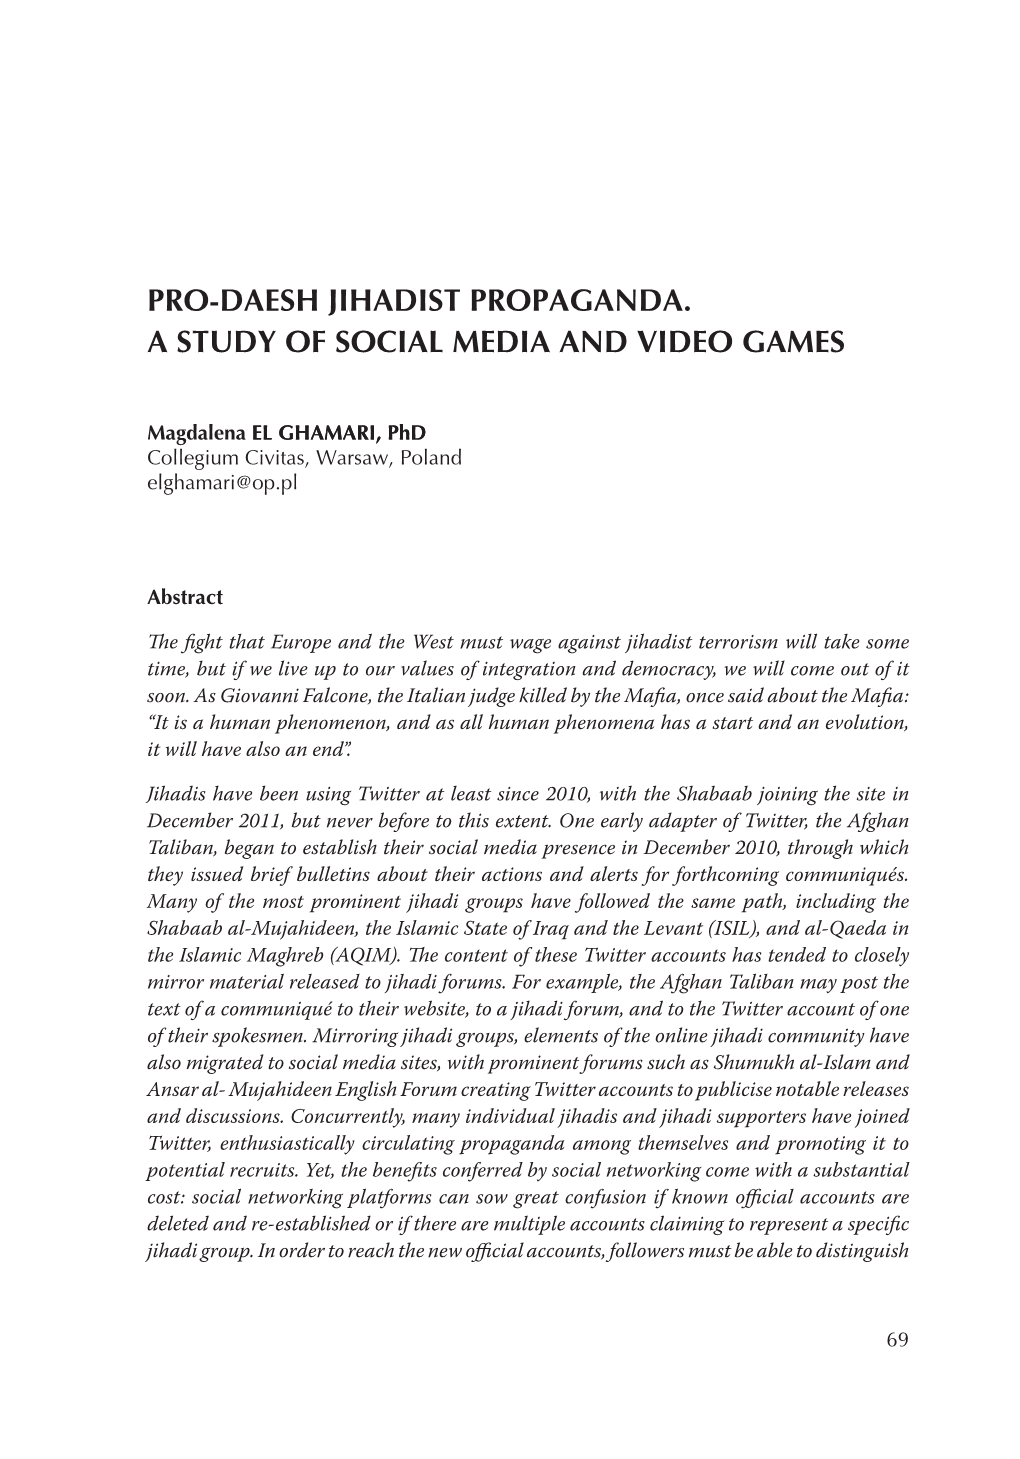 Pro-Daesh Jihadist Propaganda. a Study of Social Media and Video Games